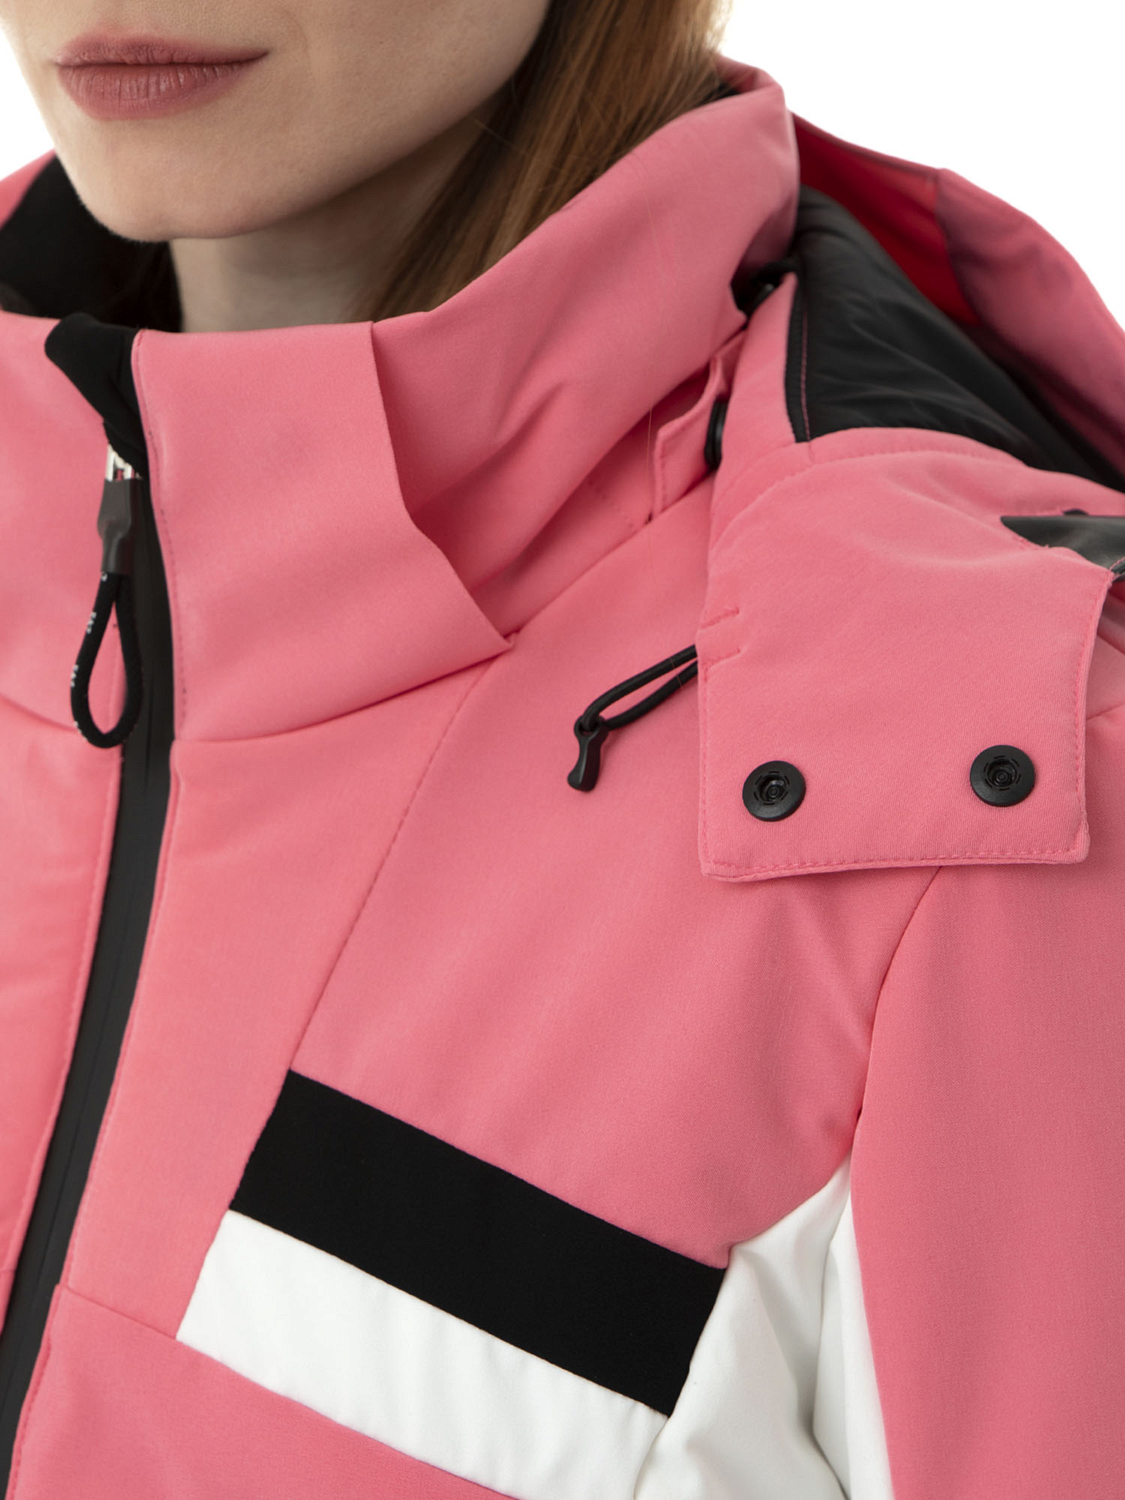 Куртка горнолыжная EA7 Emporio Armani Ski W Kitzbuhel Protectum Colorblock Pink Lemonade